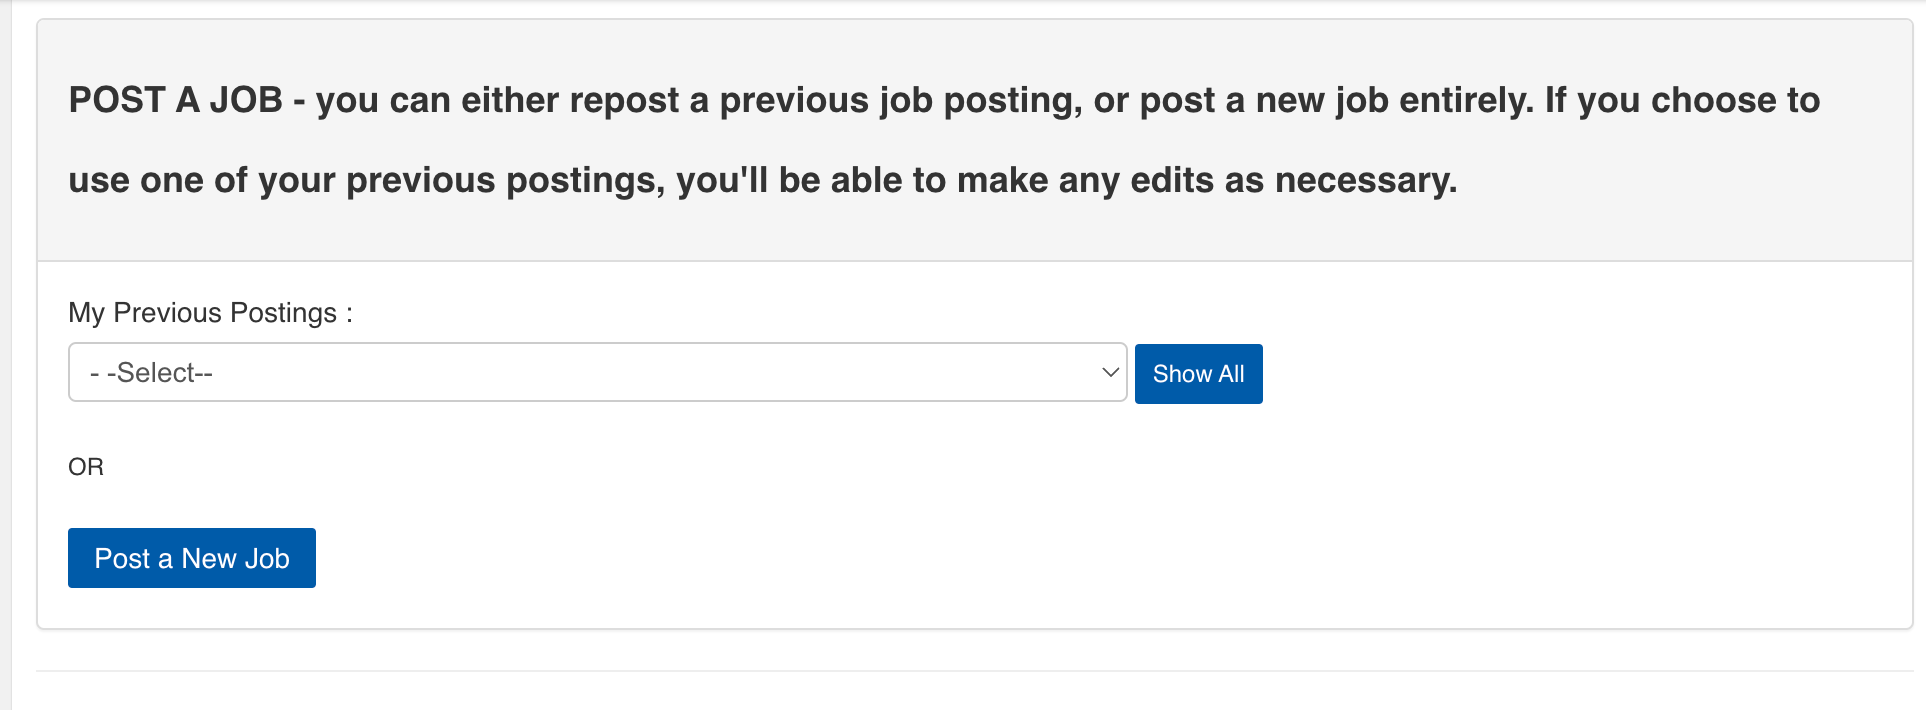 Screenshot of post a job options in WaterlooWorks